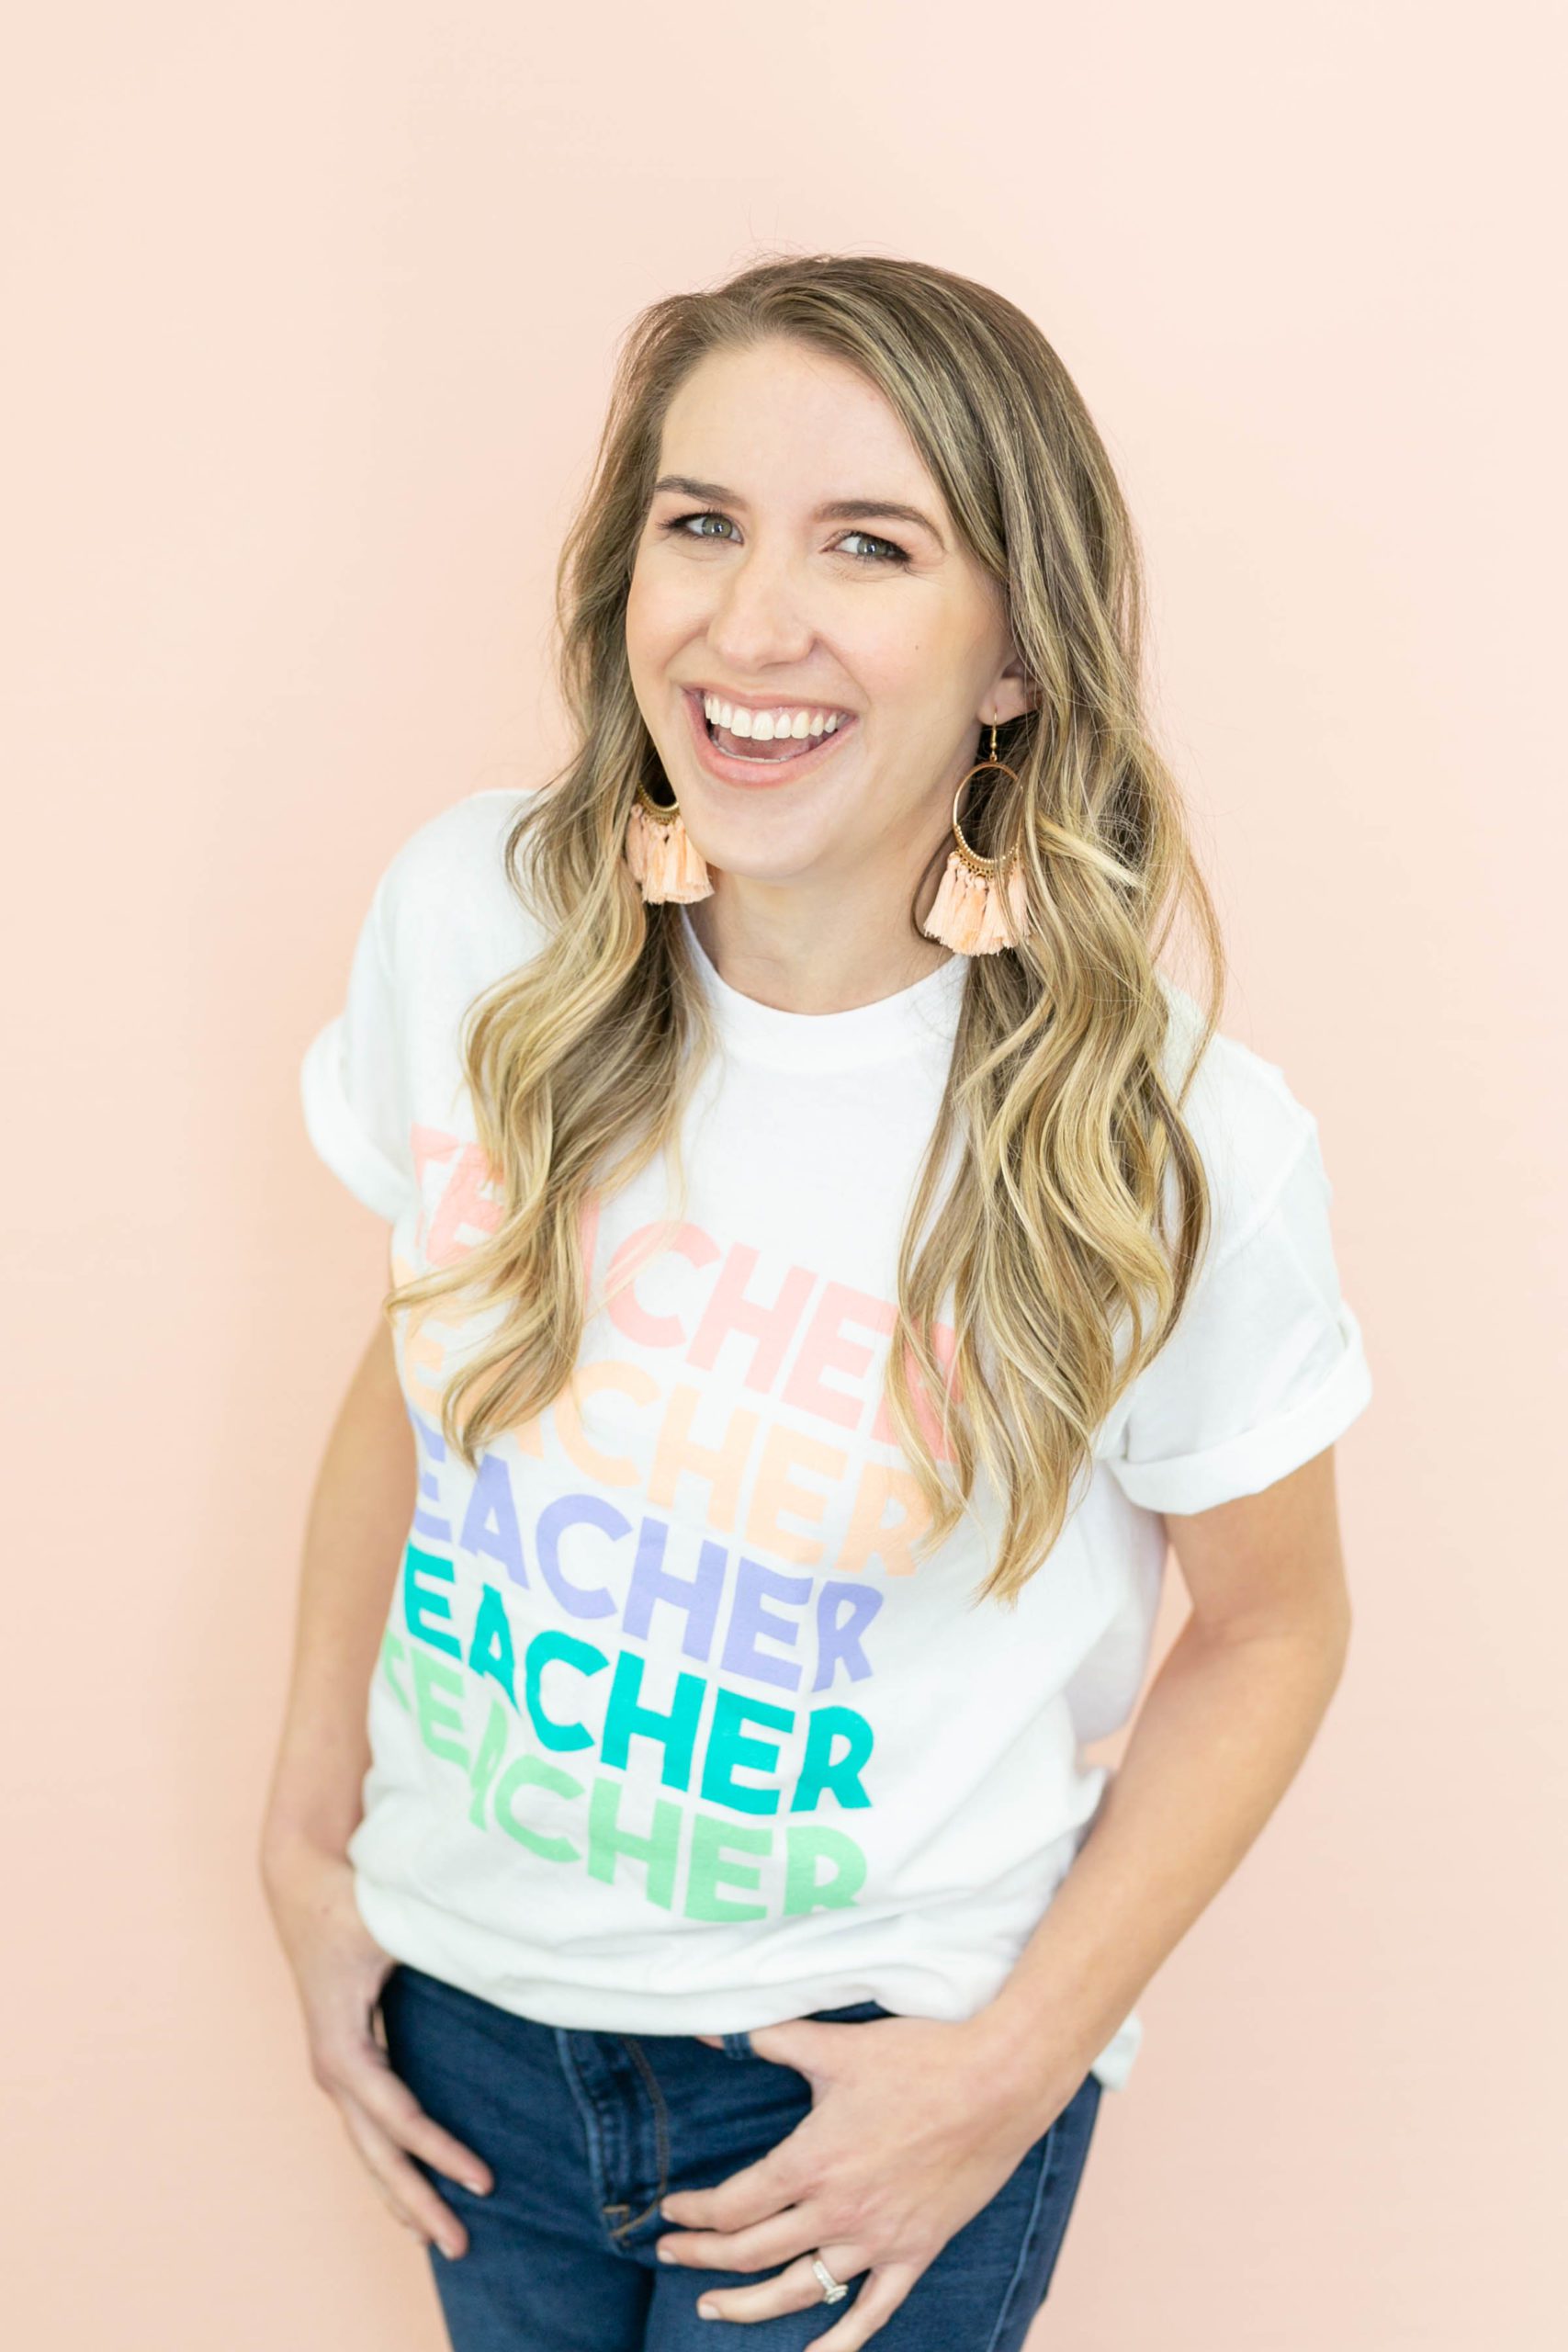 Teachers Pay Teachers Brand Session with Creator Briana Beverly 